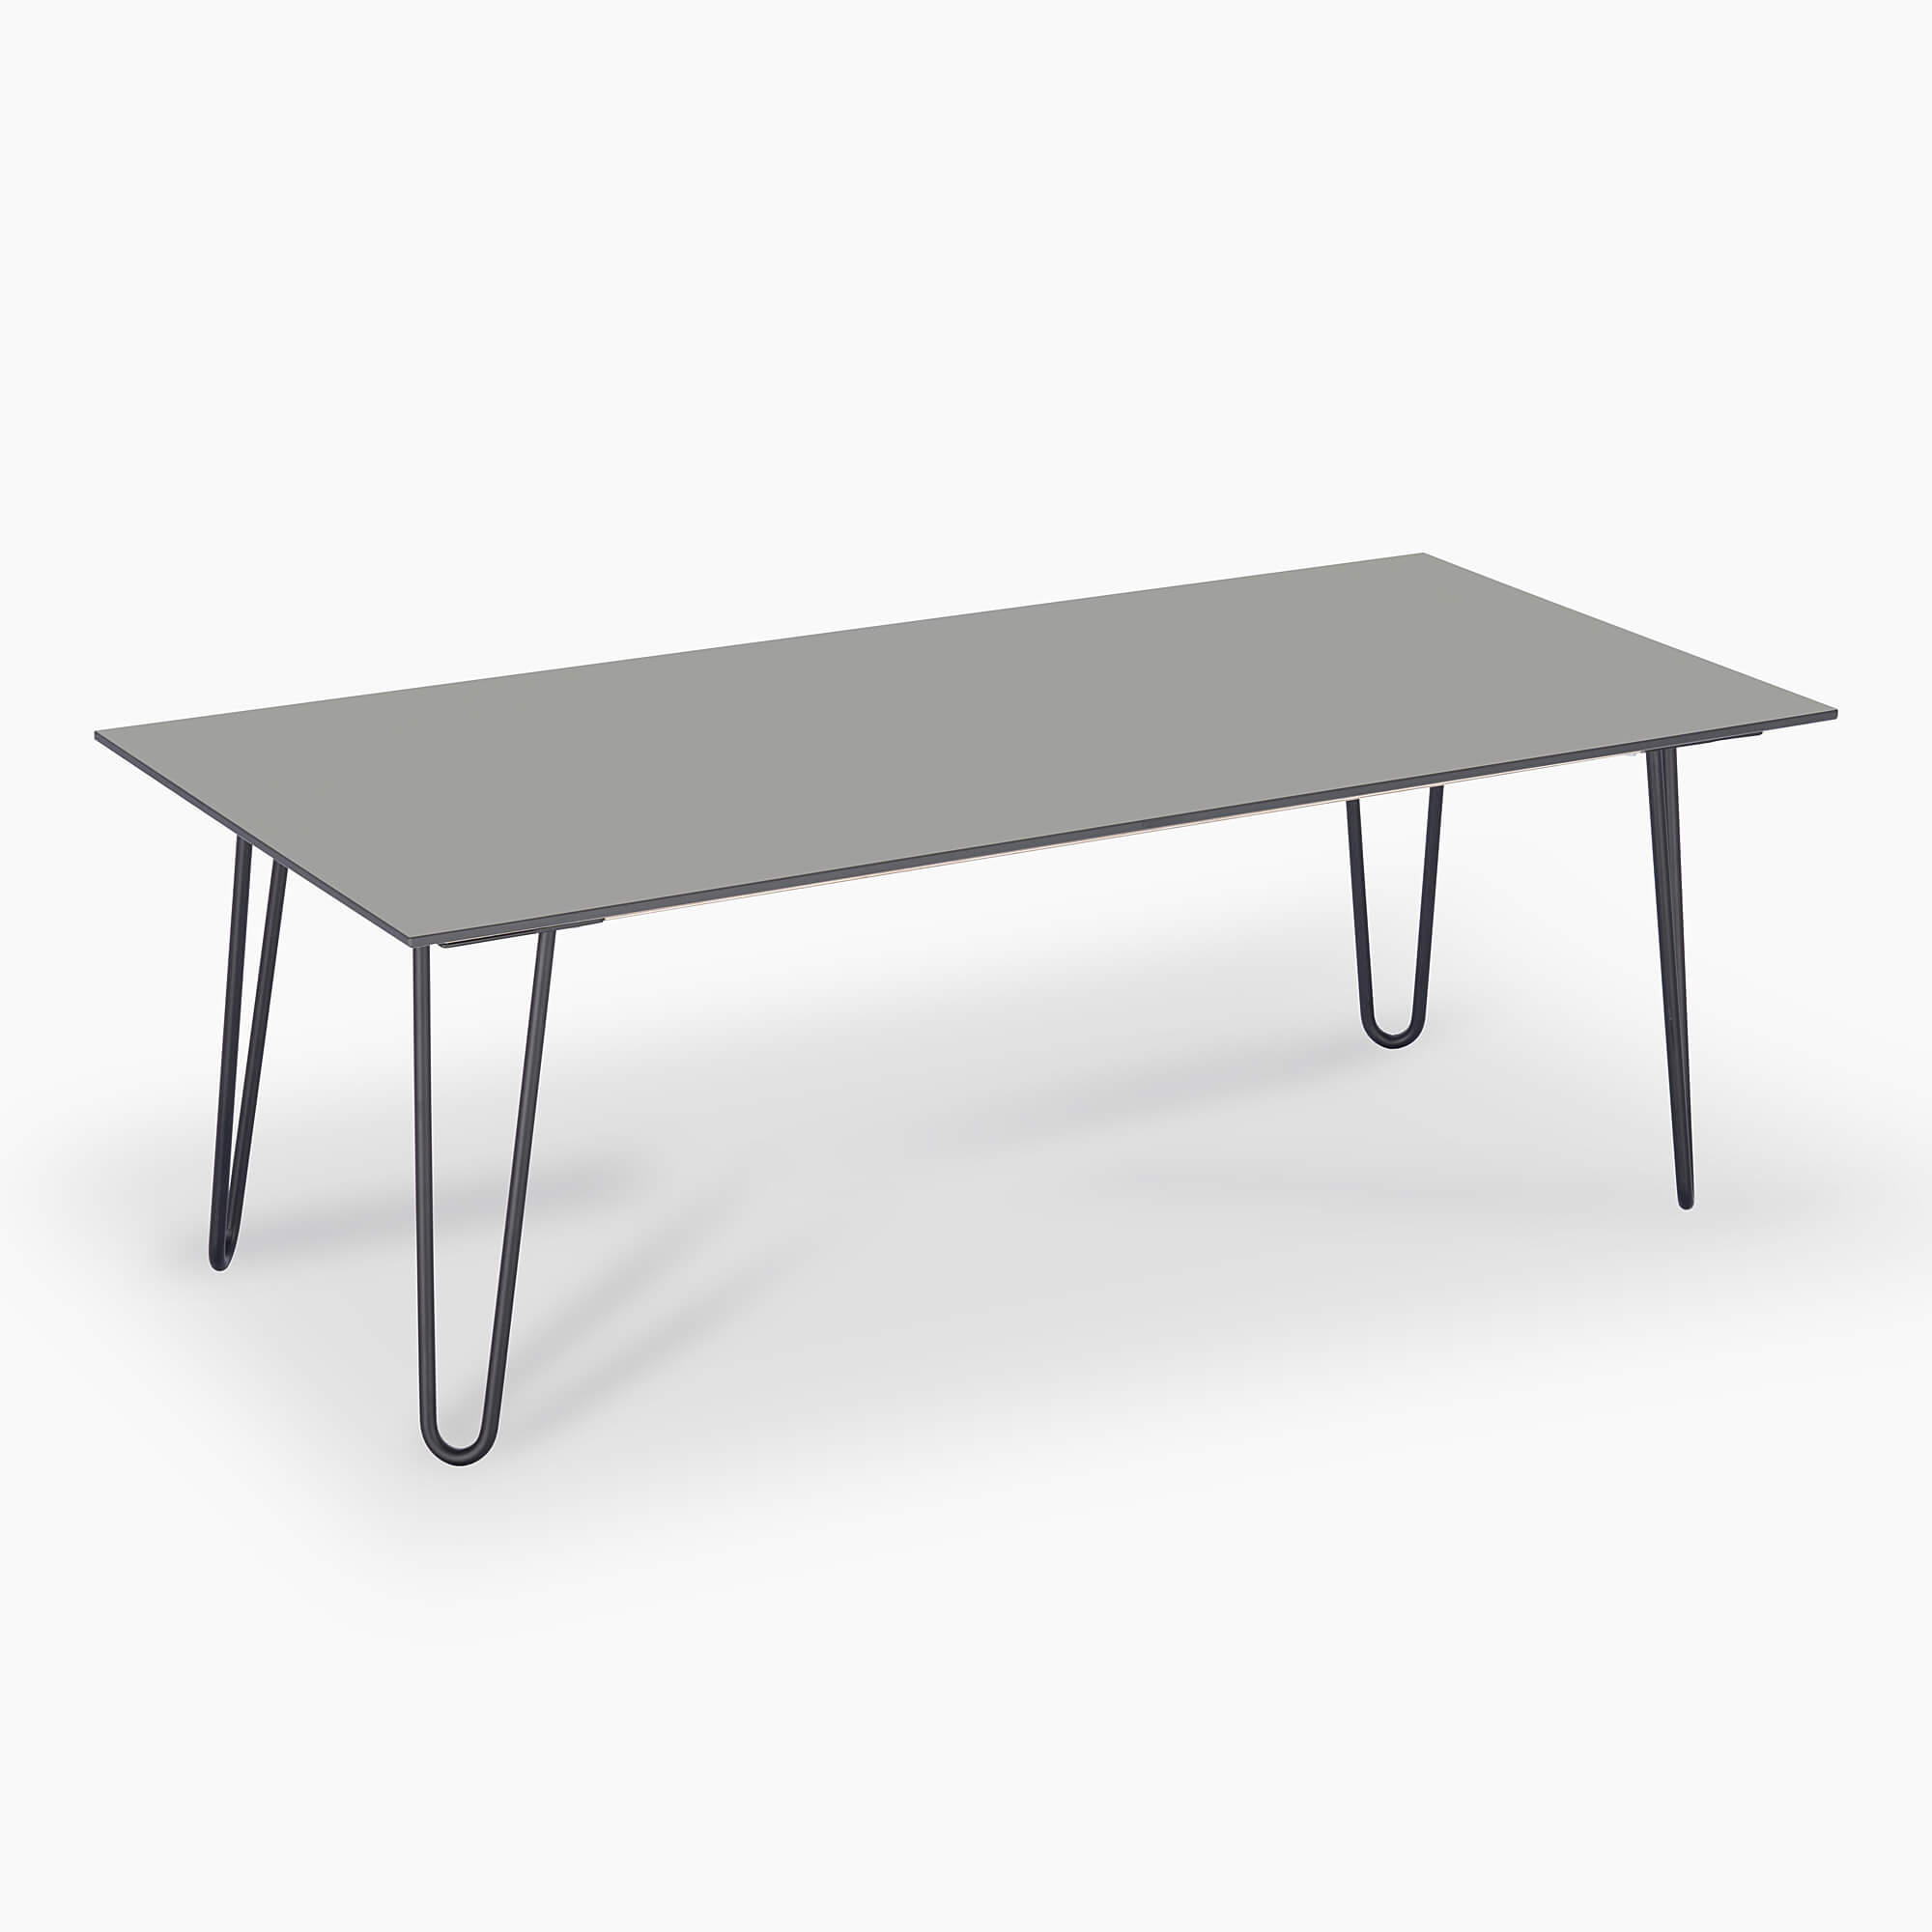 Living-room-table-rectangular-grey-black-powder-coated-hairpin-legs